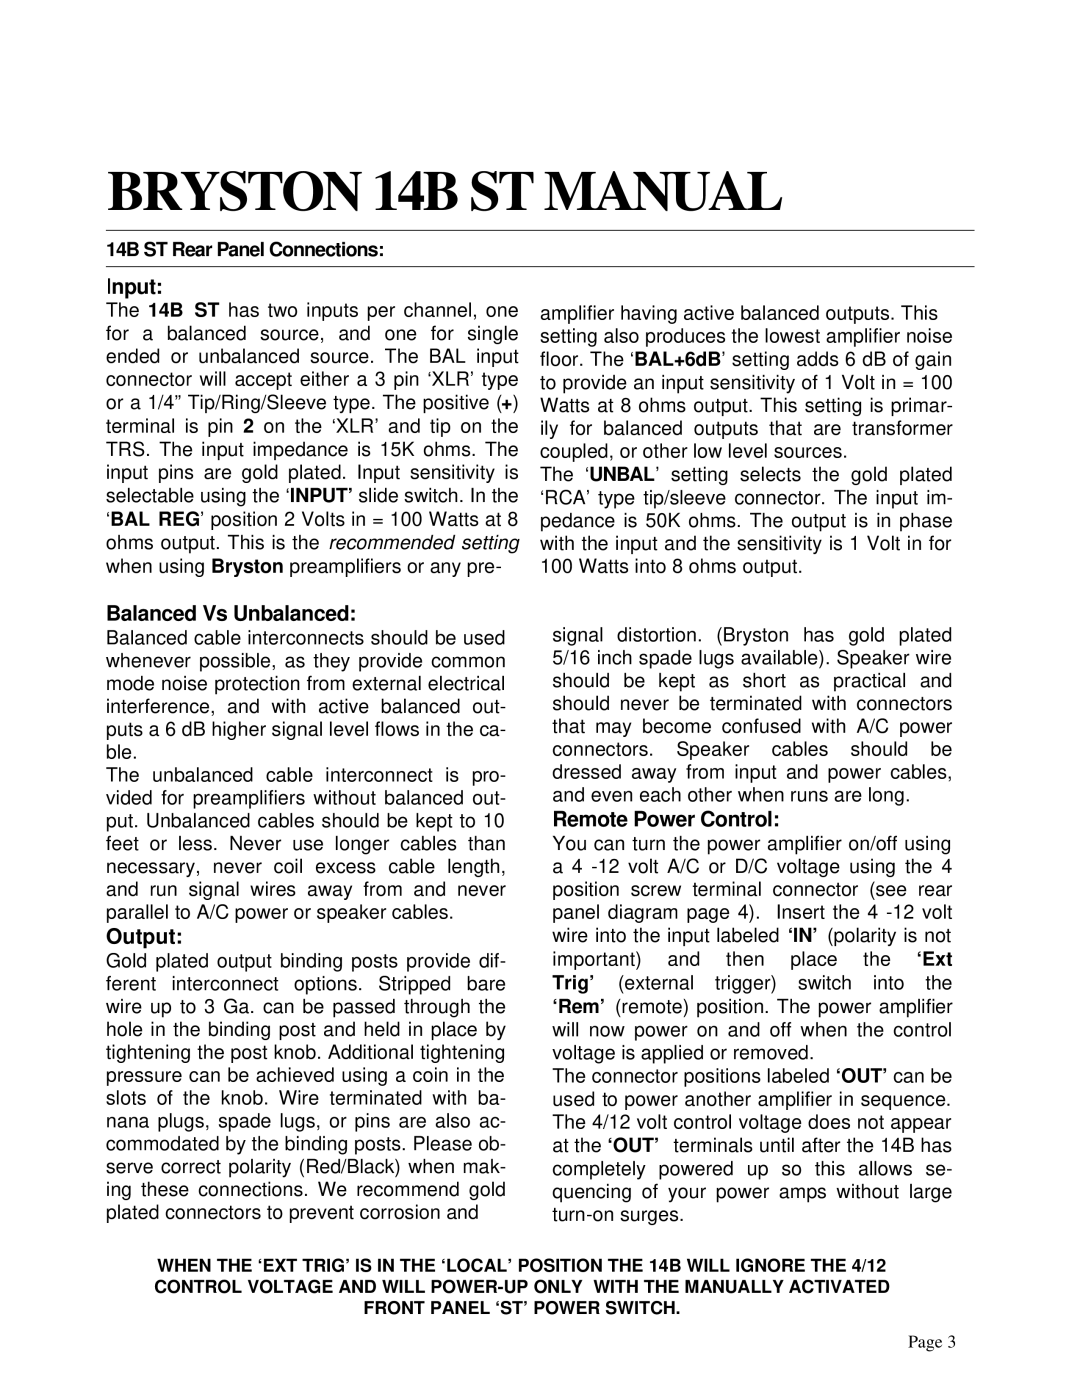 Bryston l14BST owner manual BRYSTON 14B ST MANUAL, Input, Balanced Vs Unbalanced, Output, Remote Power Control 